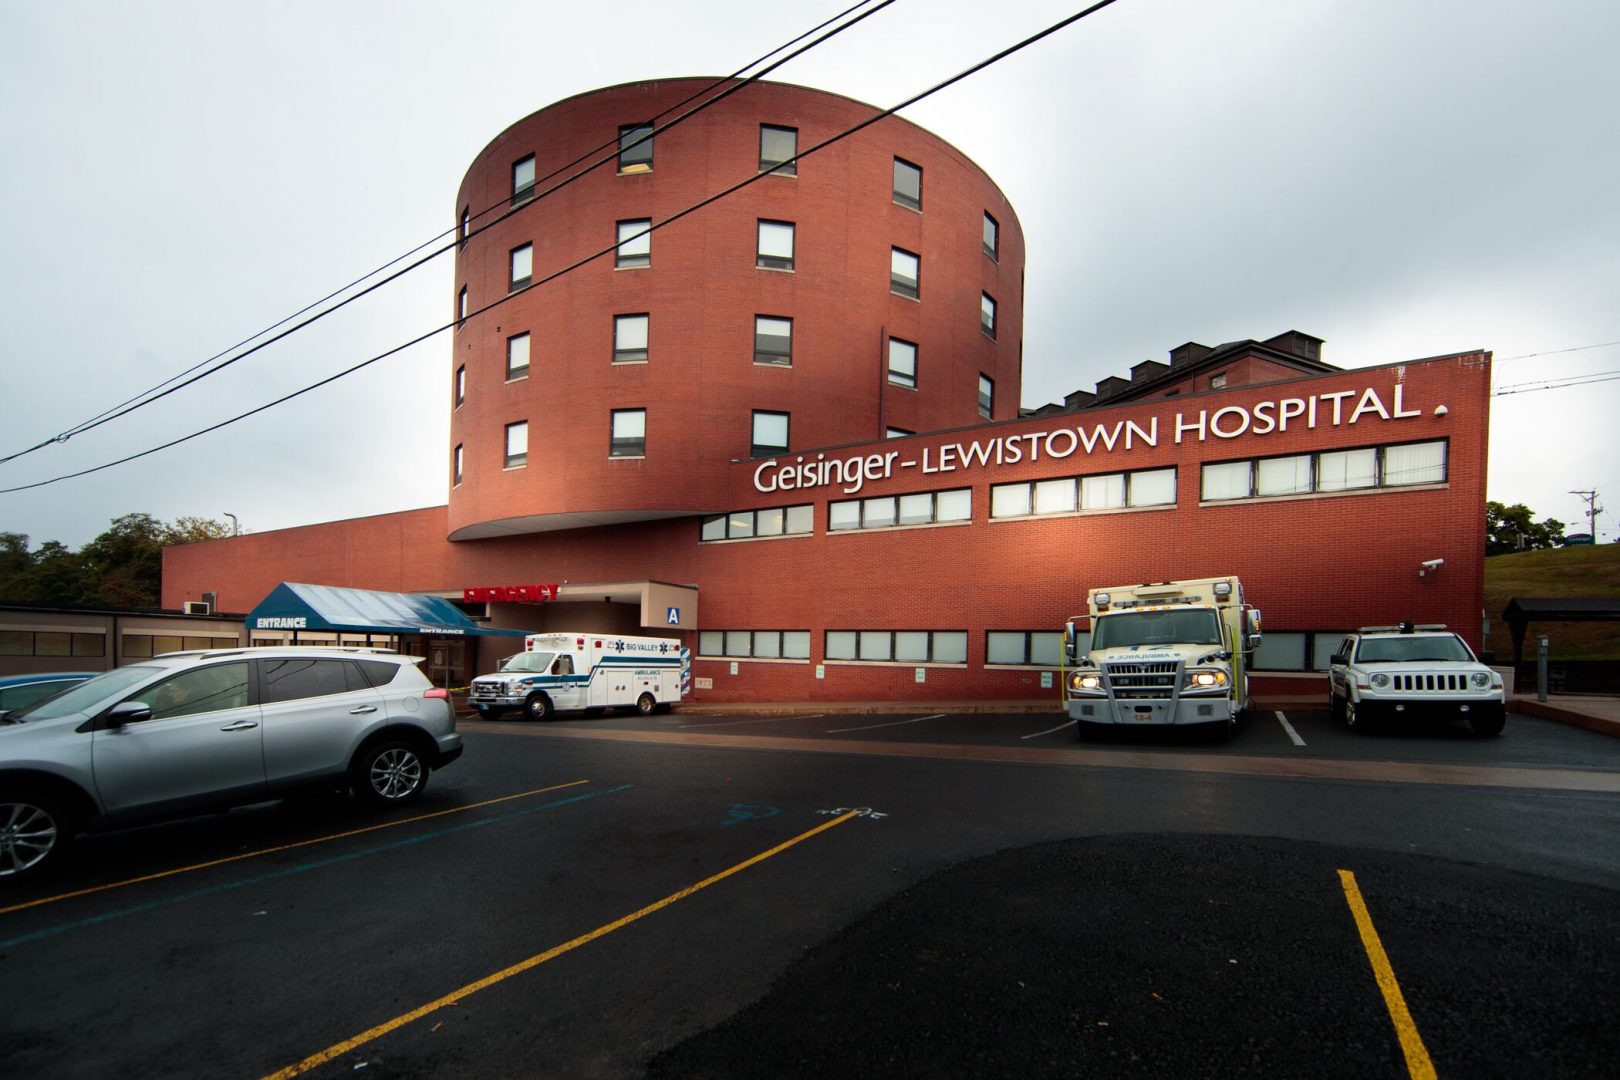 Geisinger hospital in Lewistown, Mifflin County. 